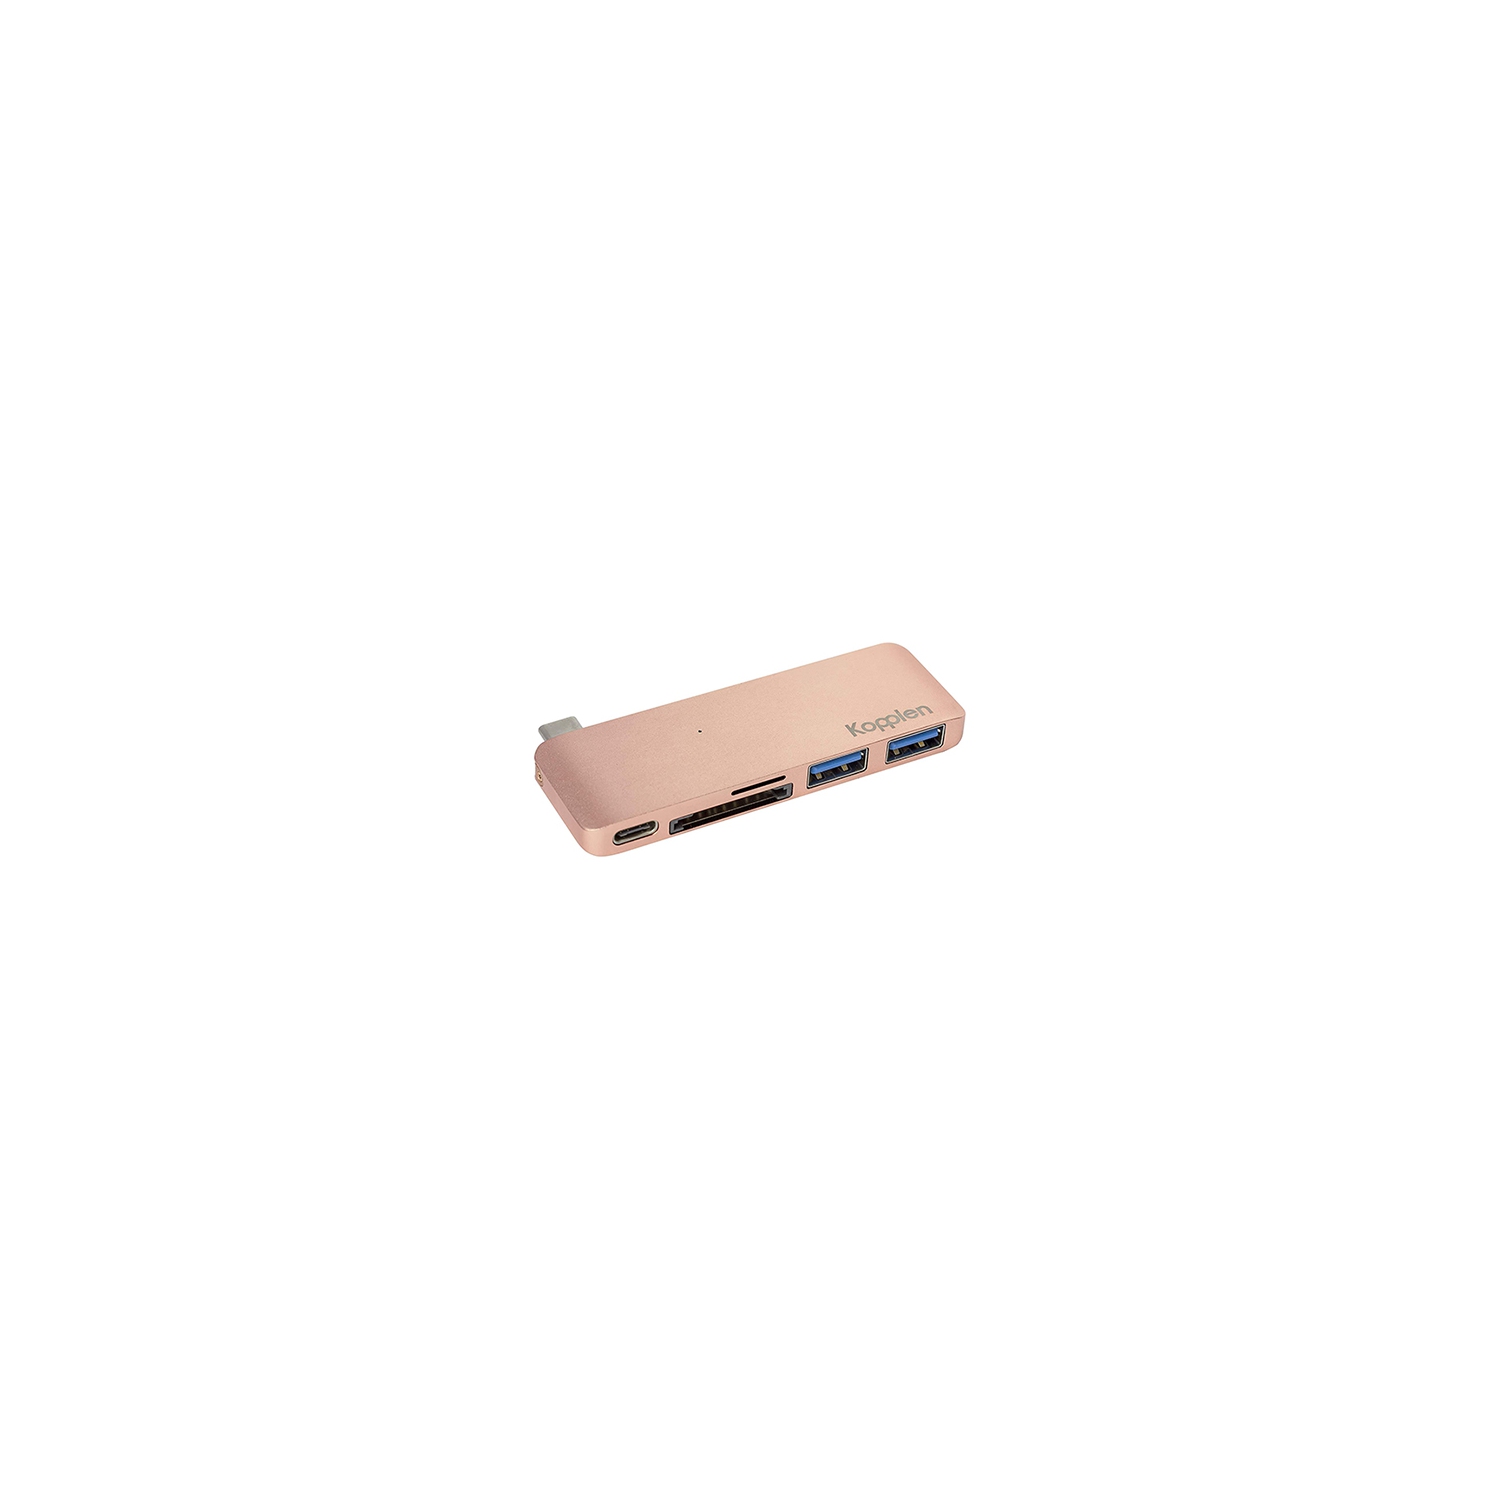 Kopplen Type-C USB Powered Multi Hub, 2x USB 3.0 Ports, SD + Micro-SD Card Reader Support Macbook - Aluminum Rose Gold